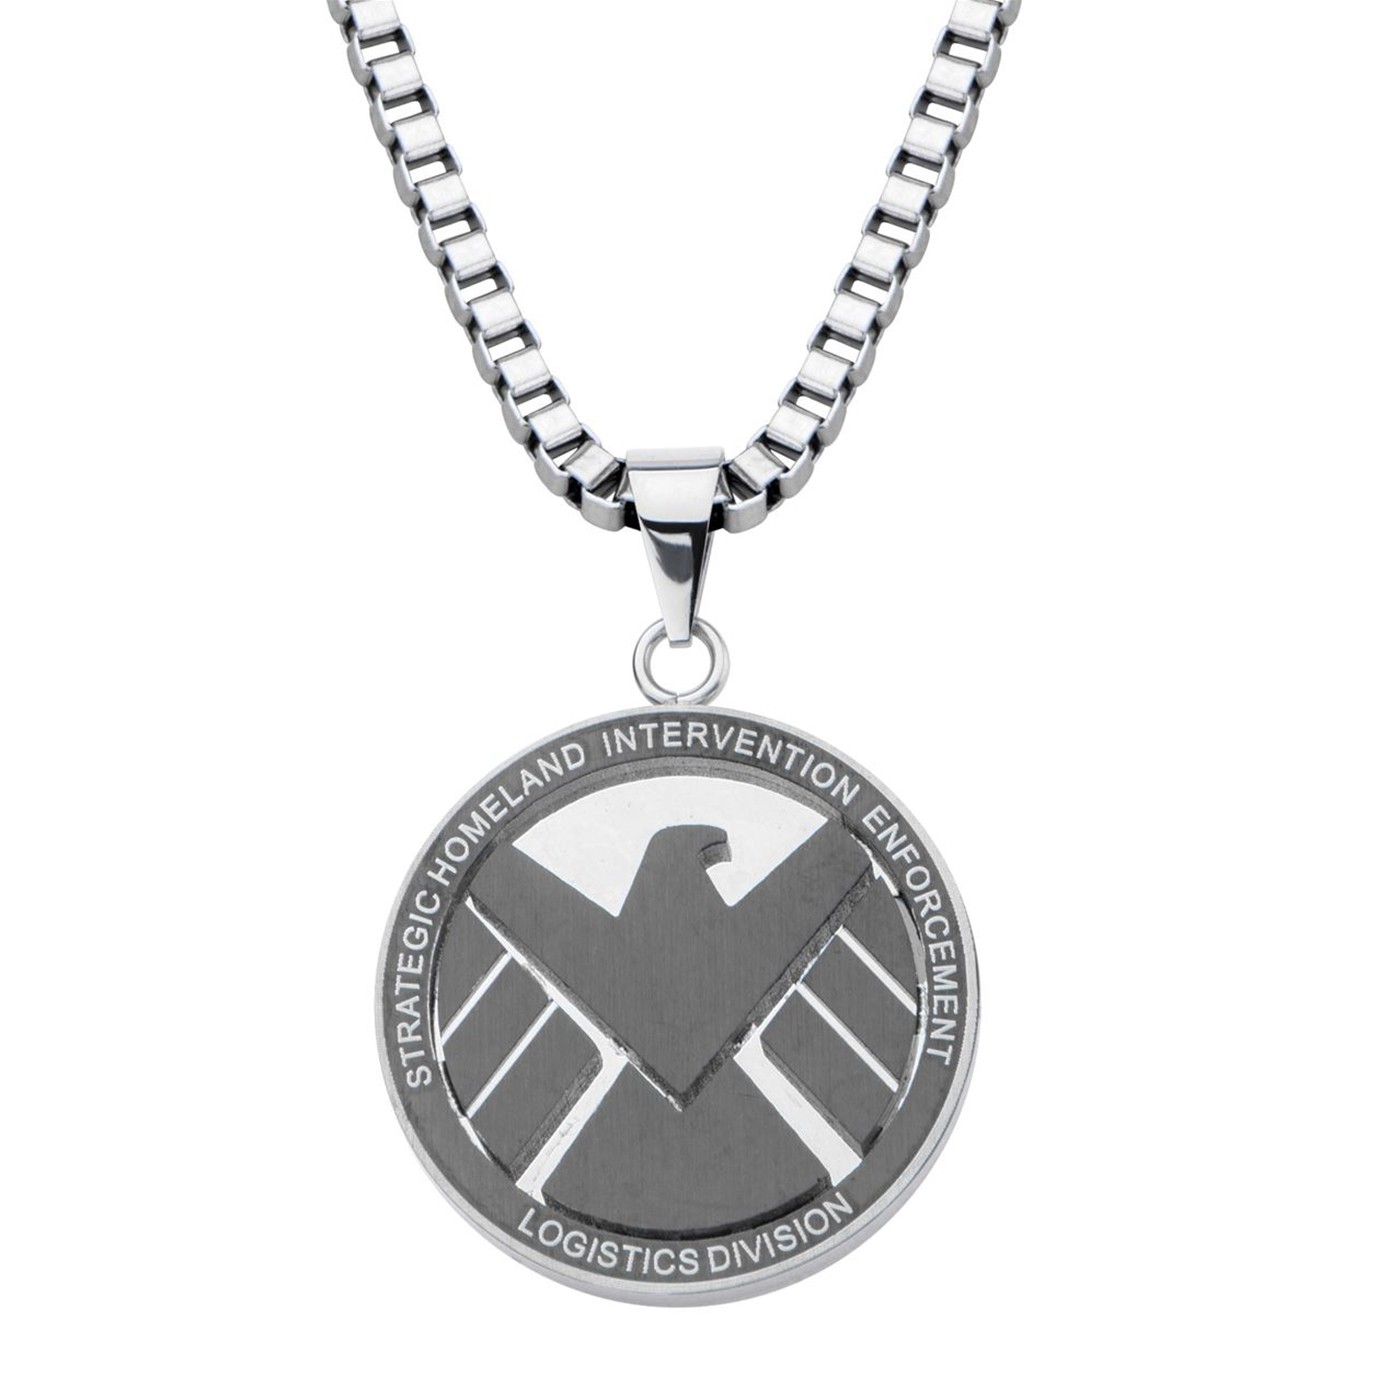 Avengers Alliance Infinite War Shield Pendant Necklace Chain For Men Women Jewelry Necklace Pendant